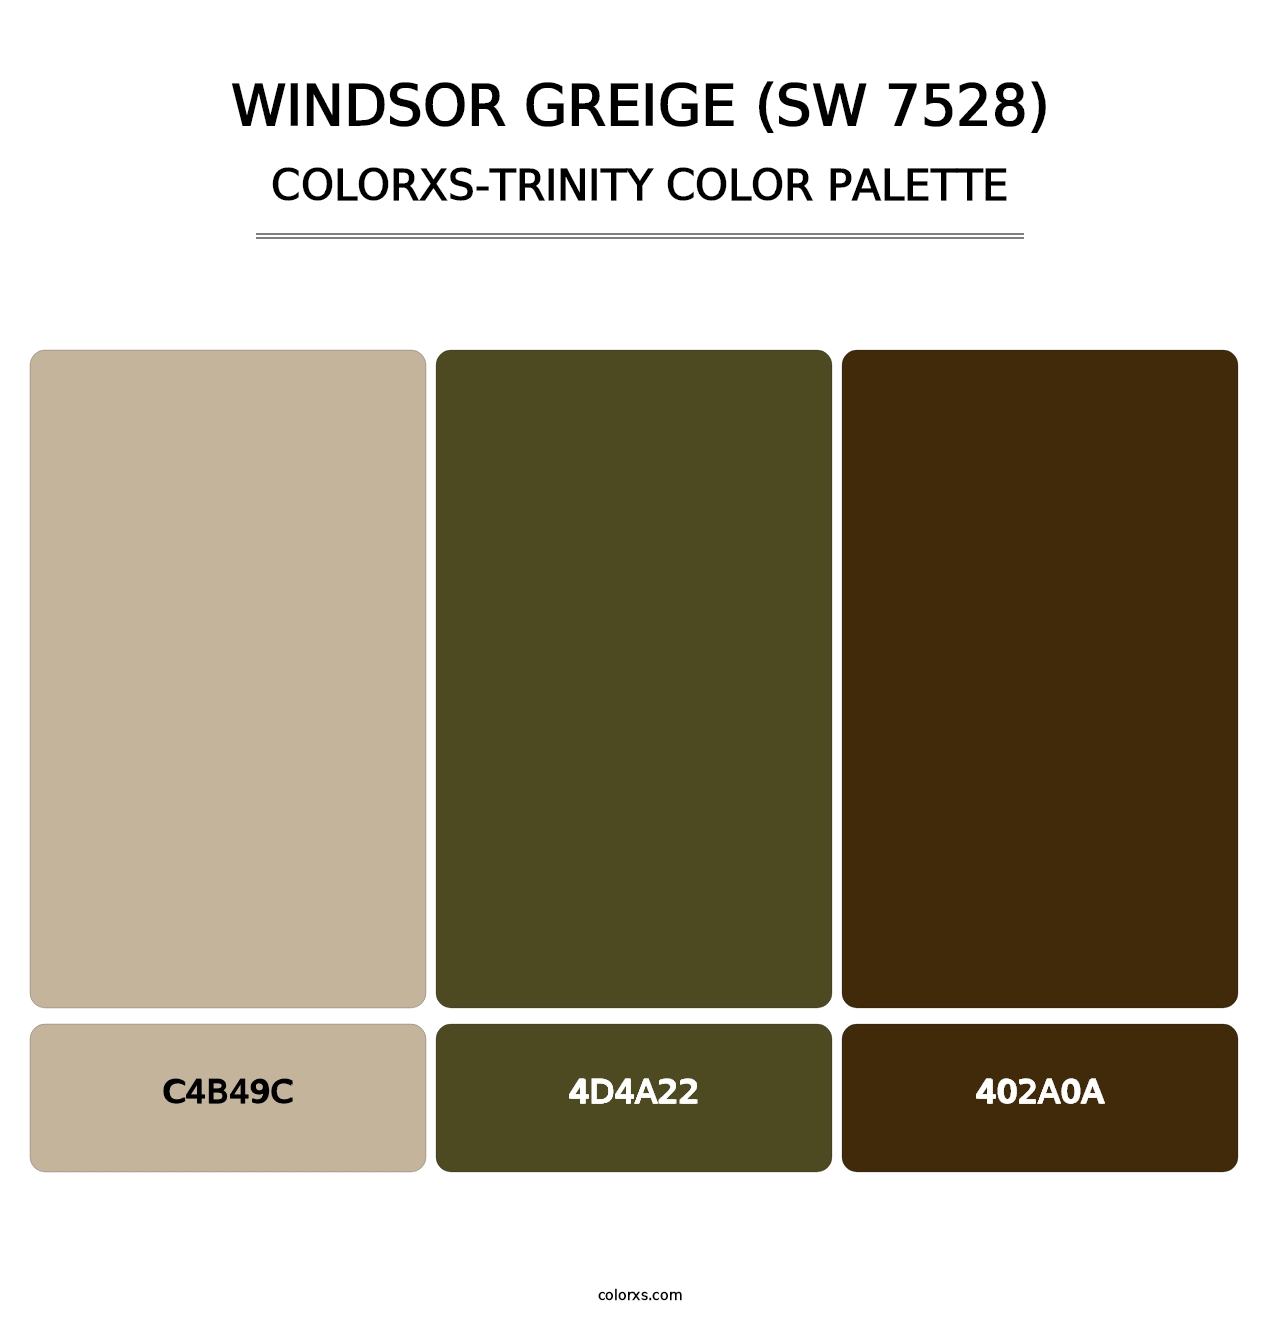 Windsor Greige (SW 7528) - Colorxs Trinity Palette